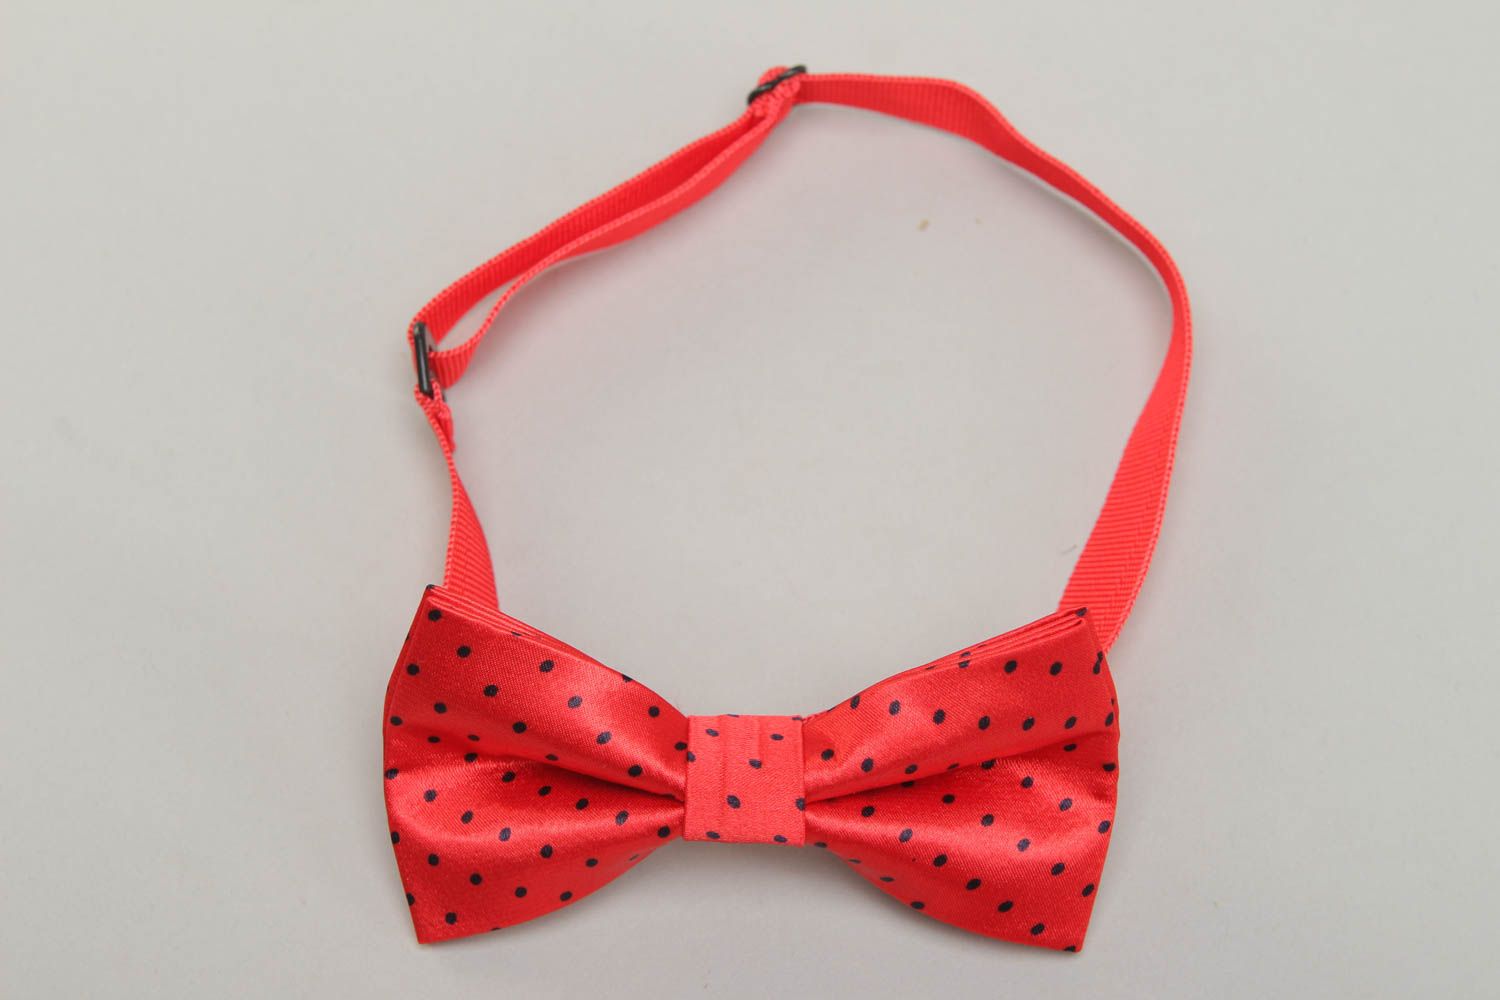 Red polka dot satin fabric bow tie photo 1